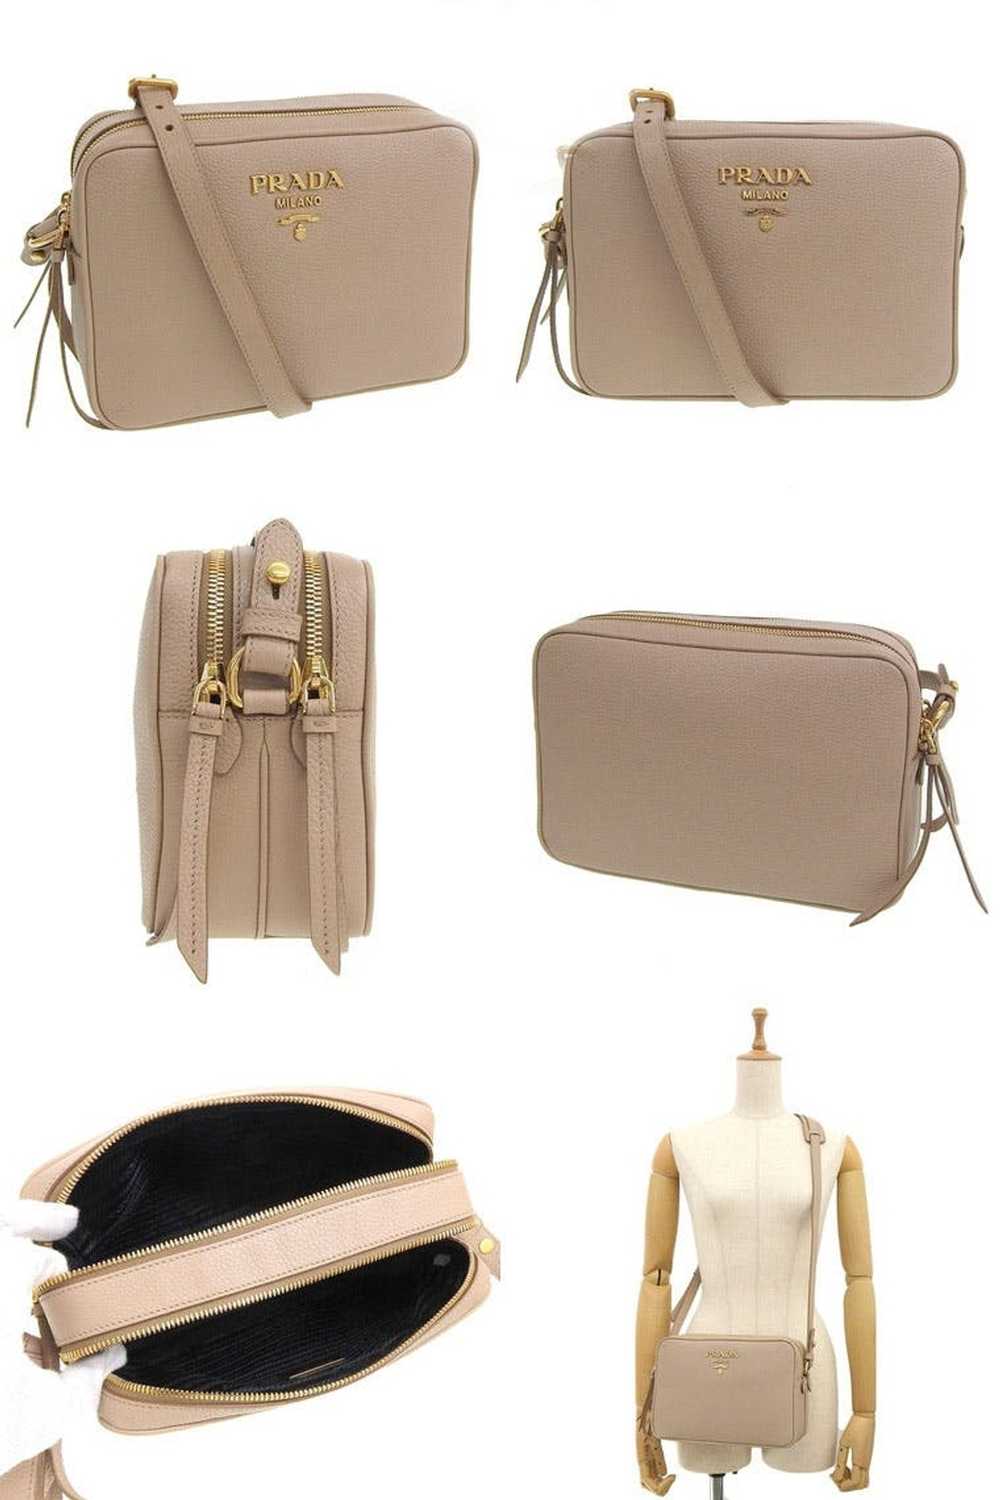 Prada Prada Shoulder Bag Leather Beige - image 2